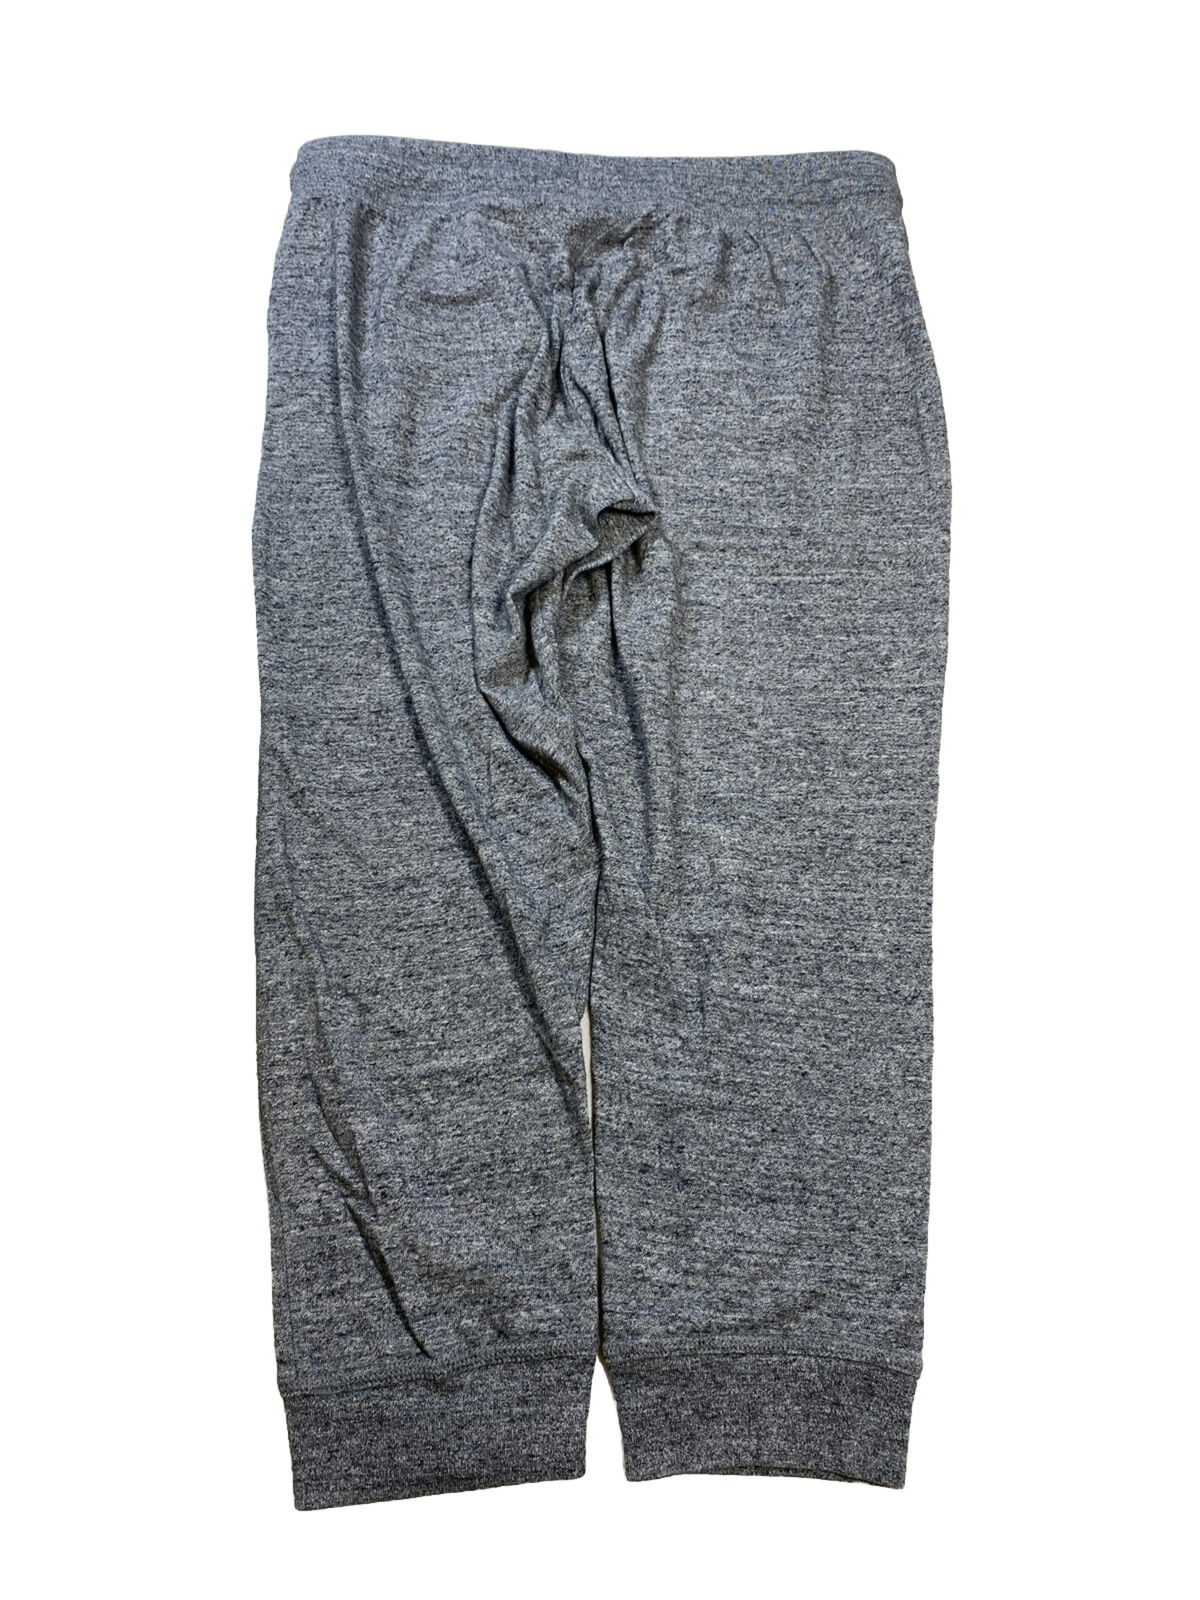 Nike Pantalones deportivos cortos de algodón fino gris para mujer - S